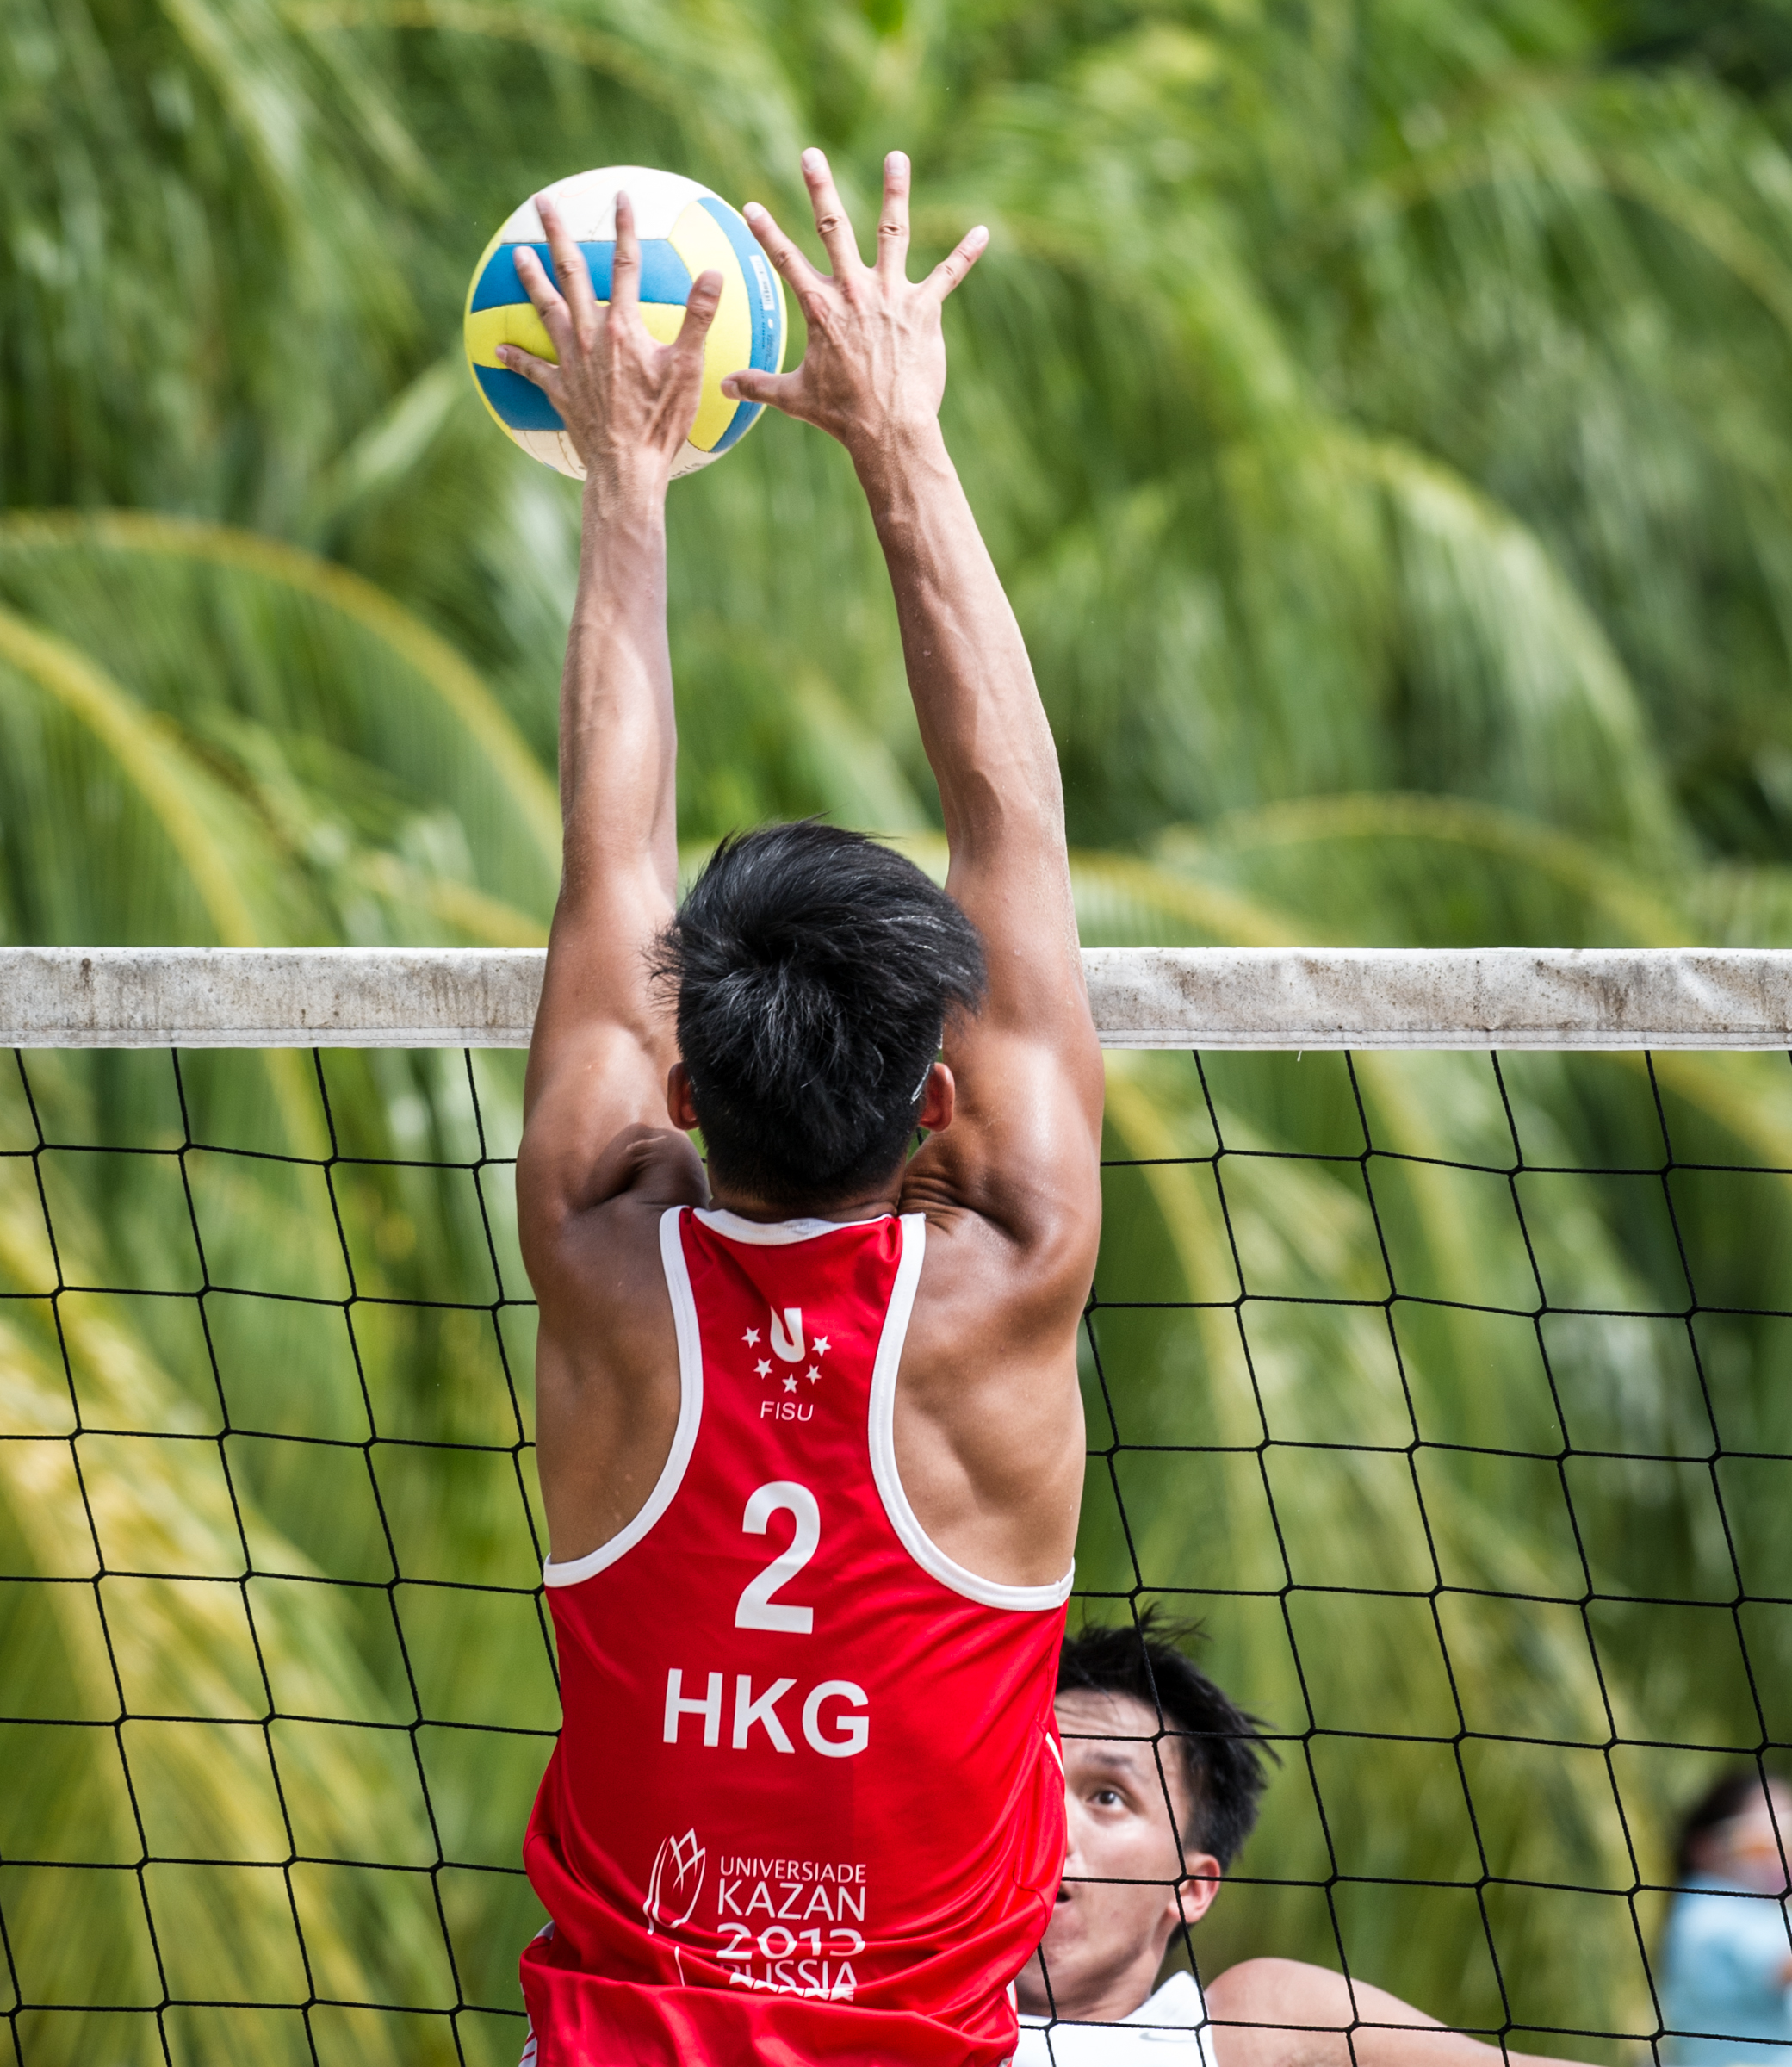 A Hong Kong player blocks a shot during the Beach Volleyball National Series at the Yio Chu Kang Swimming Complex.